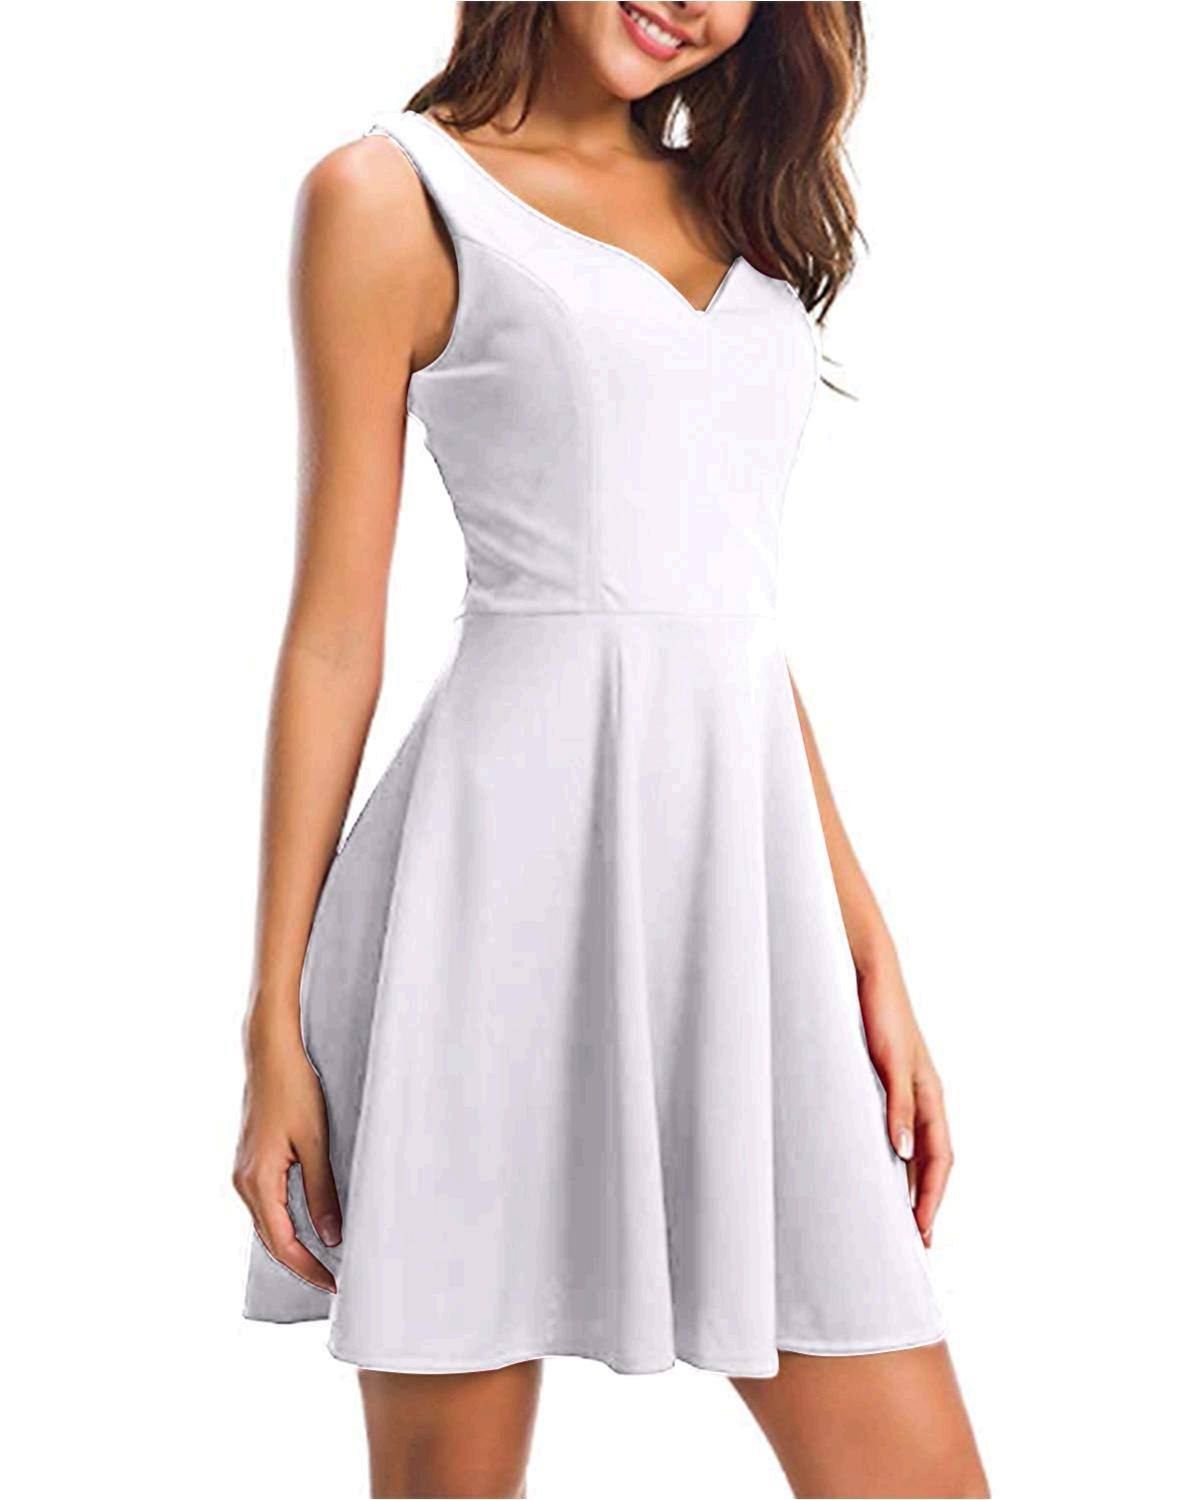 Kidsform Women's Sleeveless Sweetheart Flared Mini Dress, White, Size ...